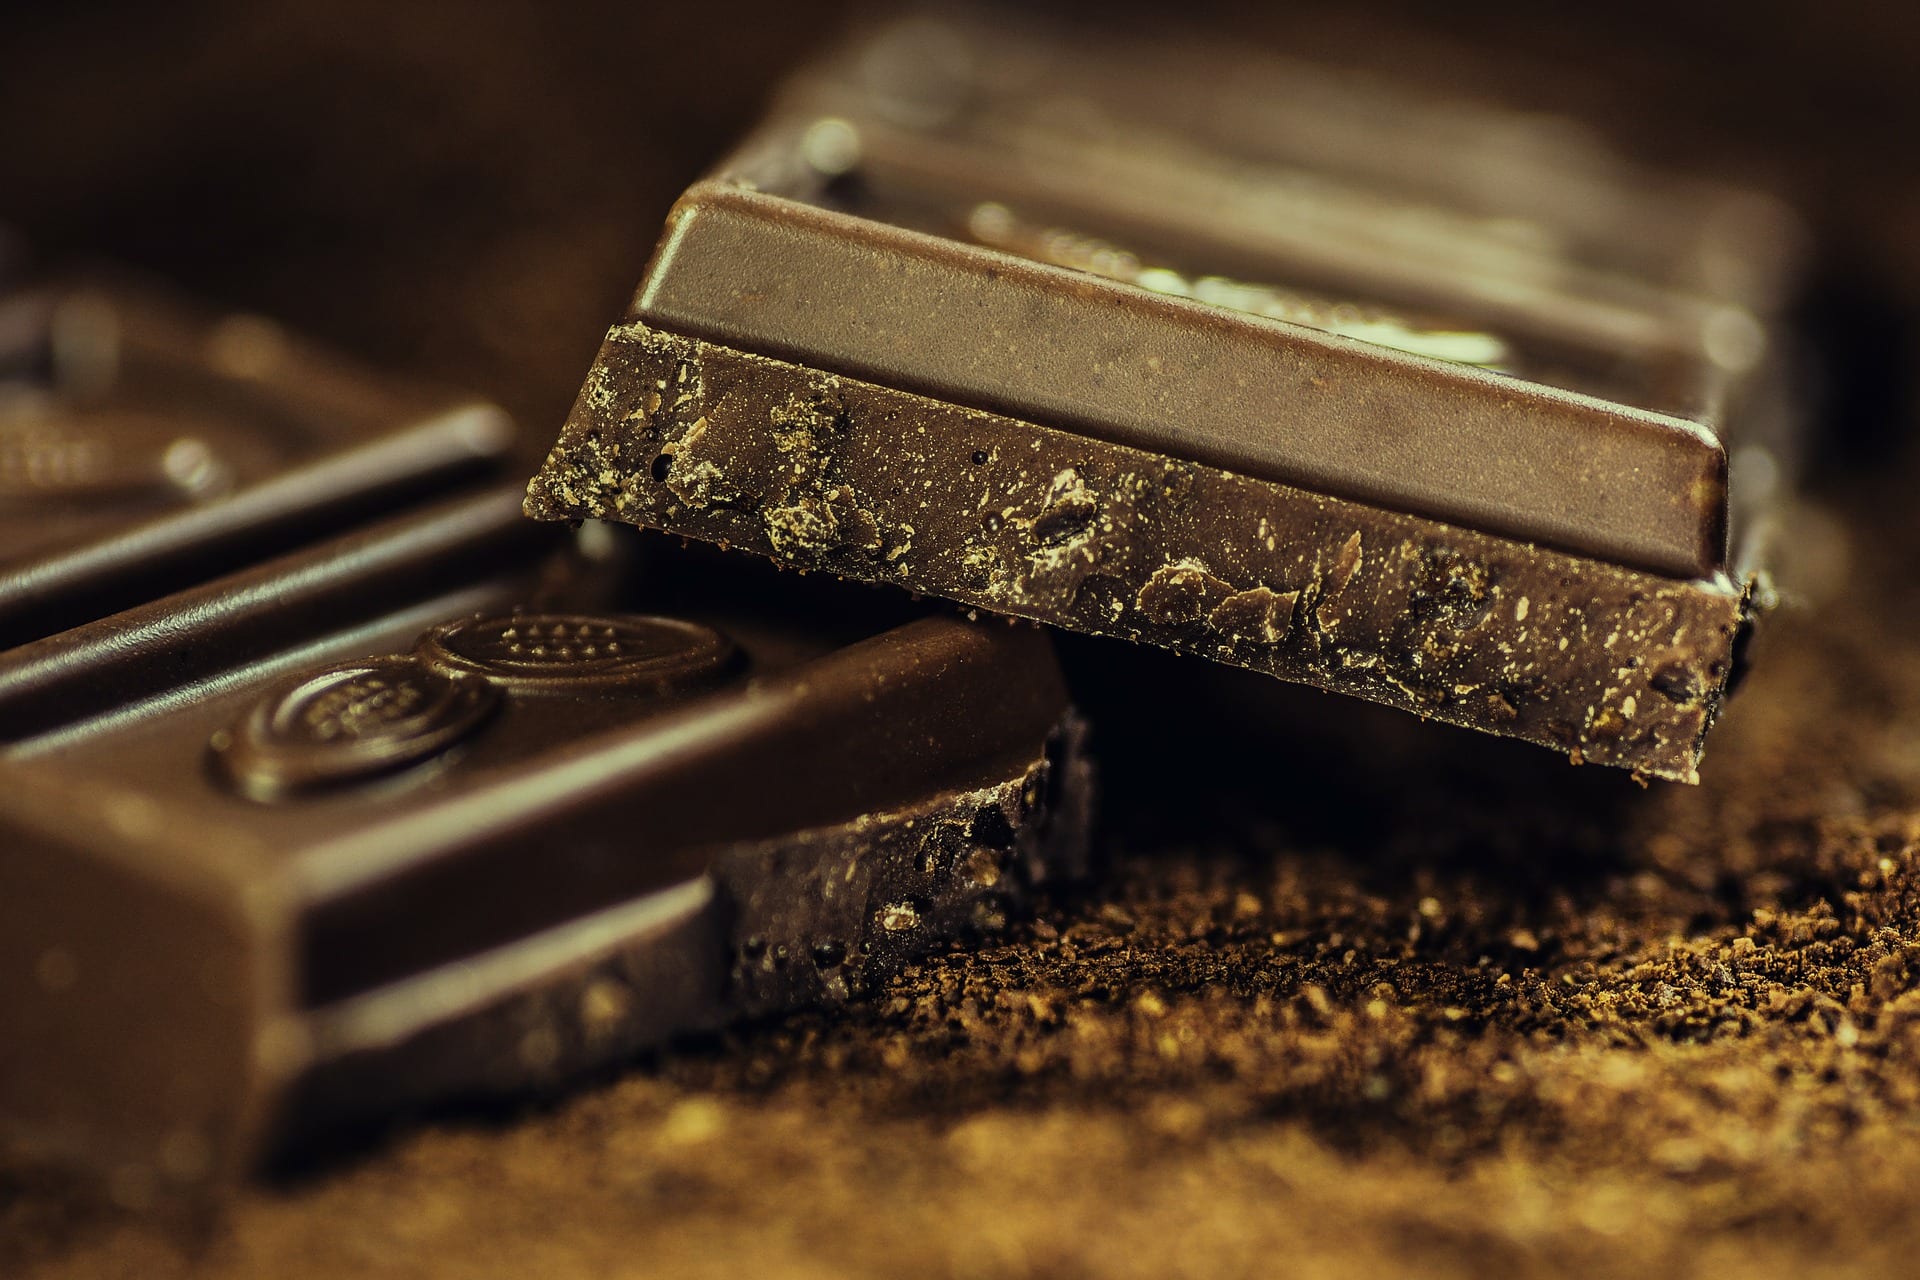 Eating dark chocolate may improve mood